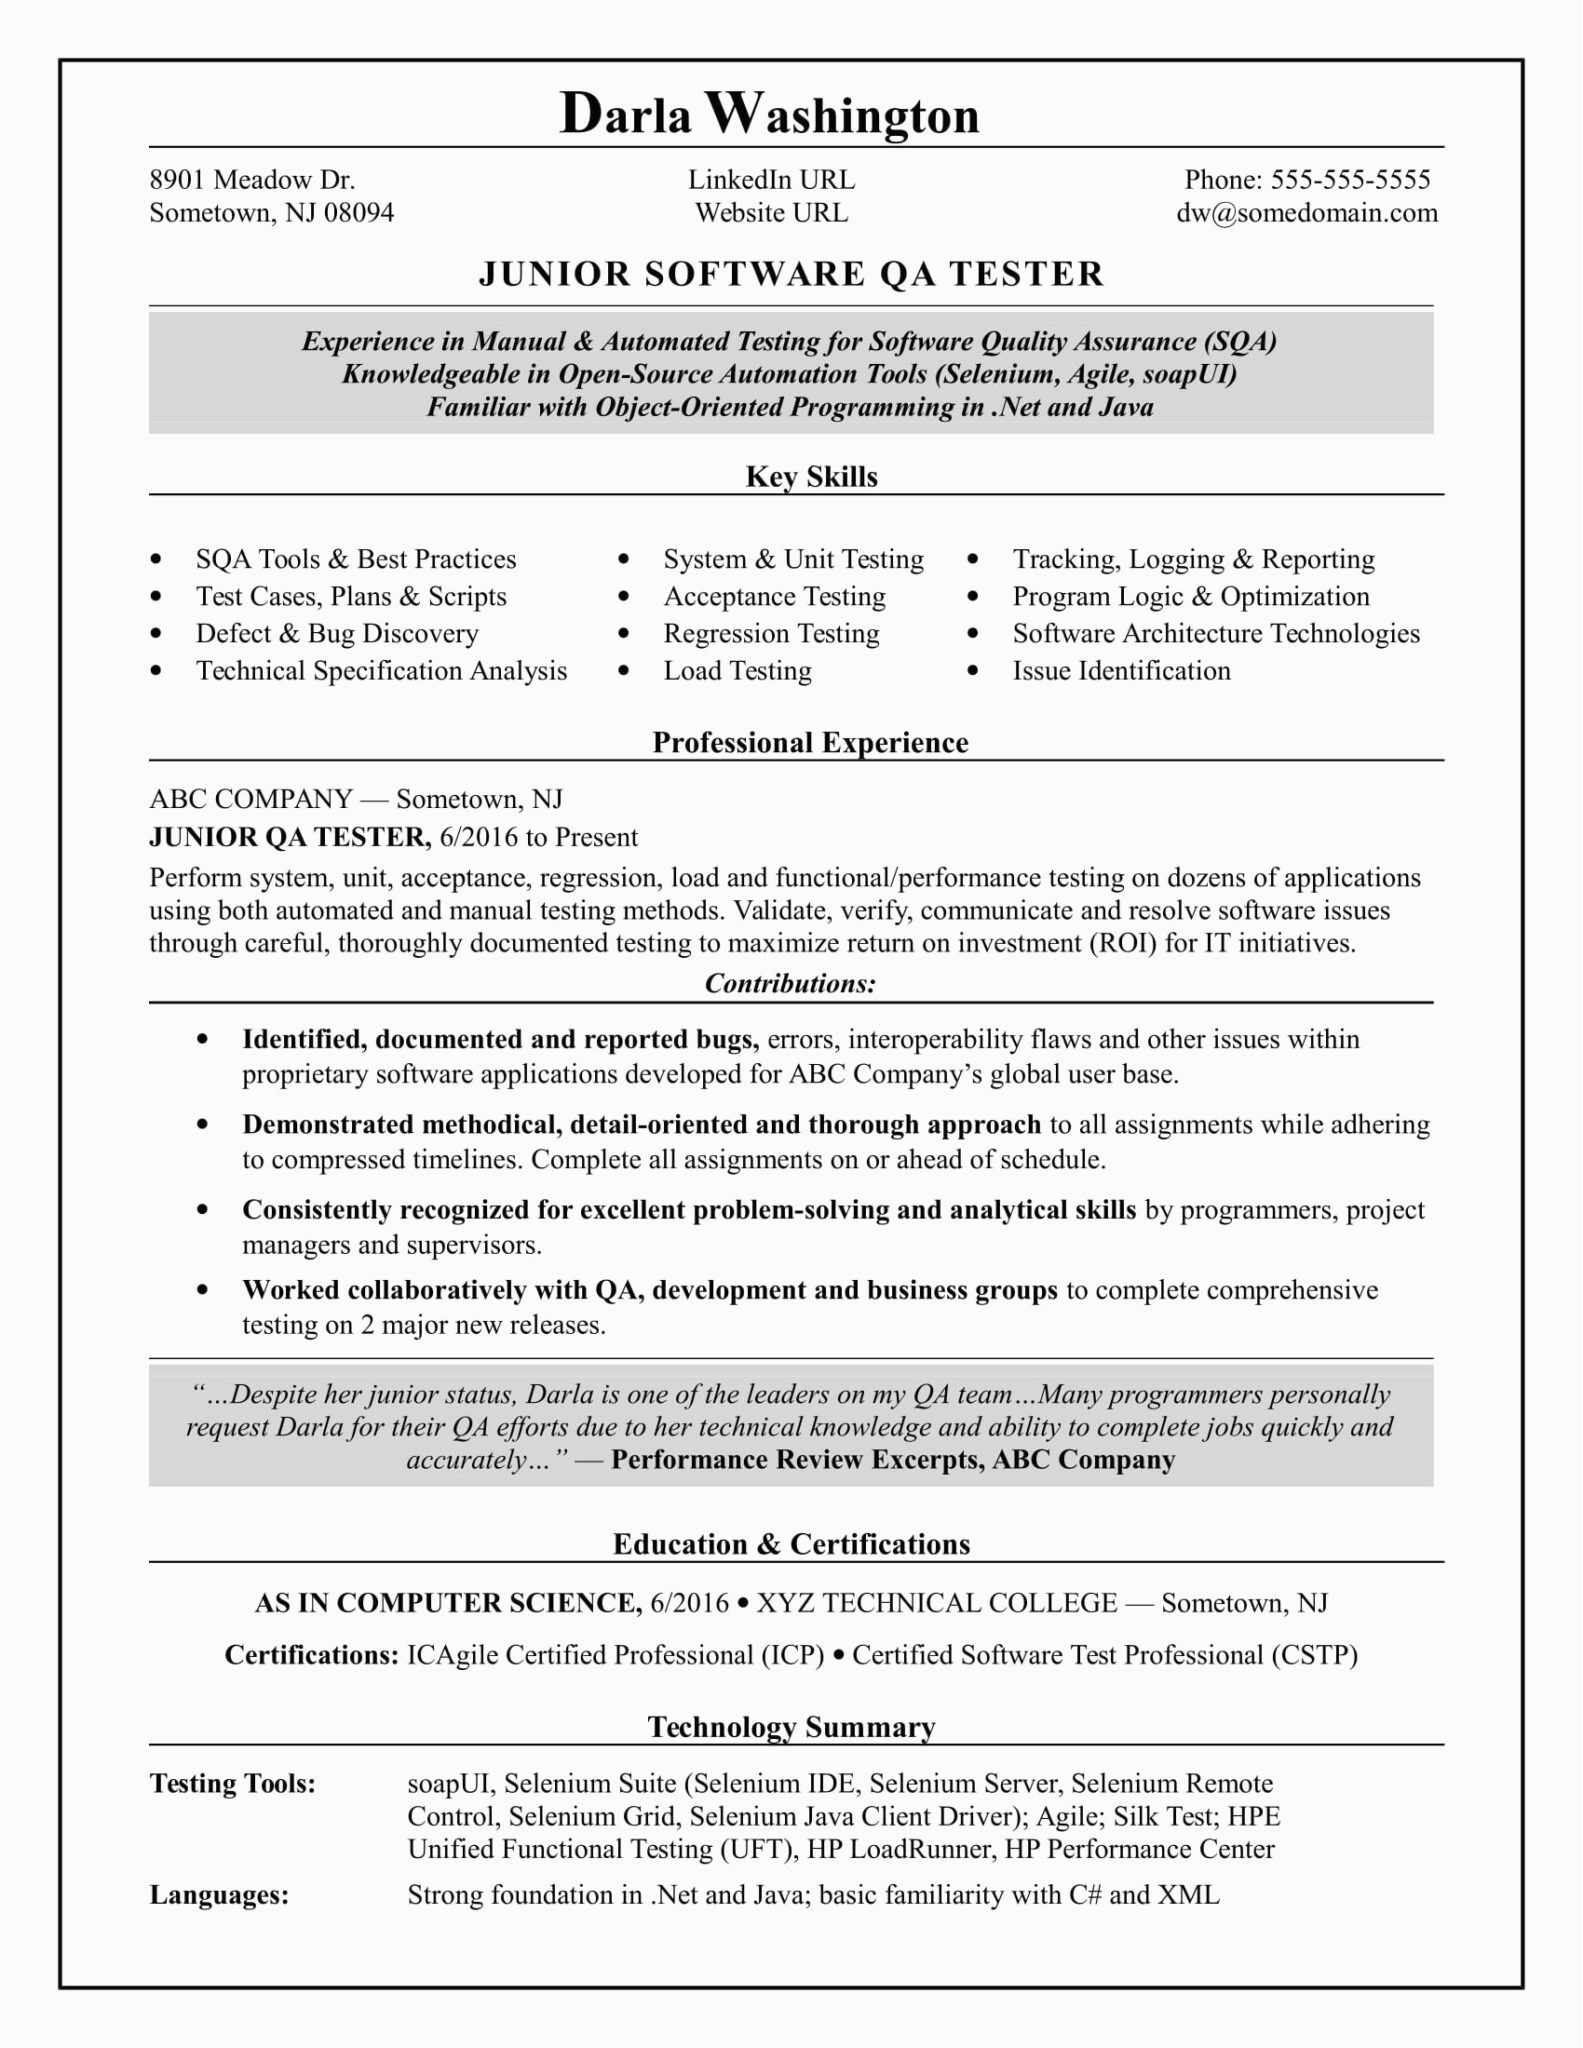 Software Quality assurance Tester Sample Resume Entry Level Qa software Tester Resume Sample